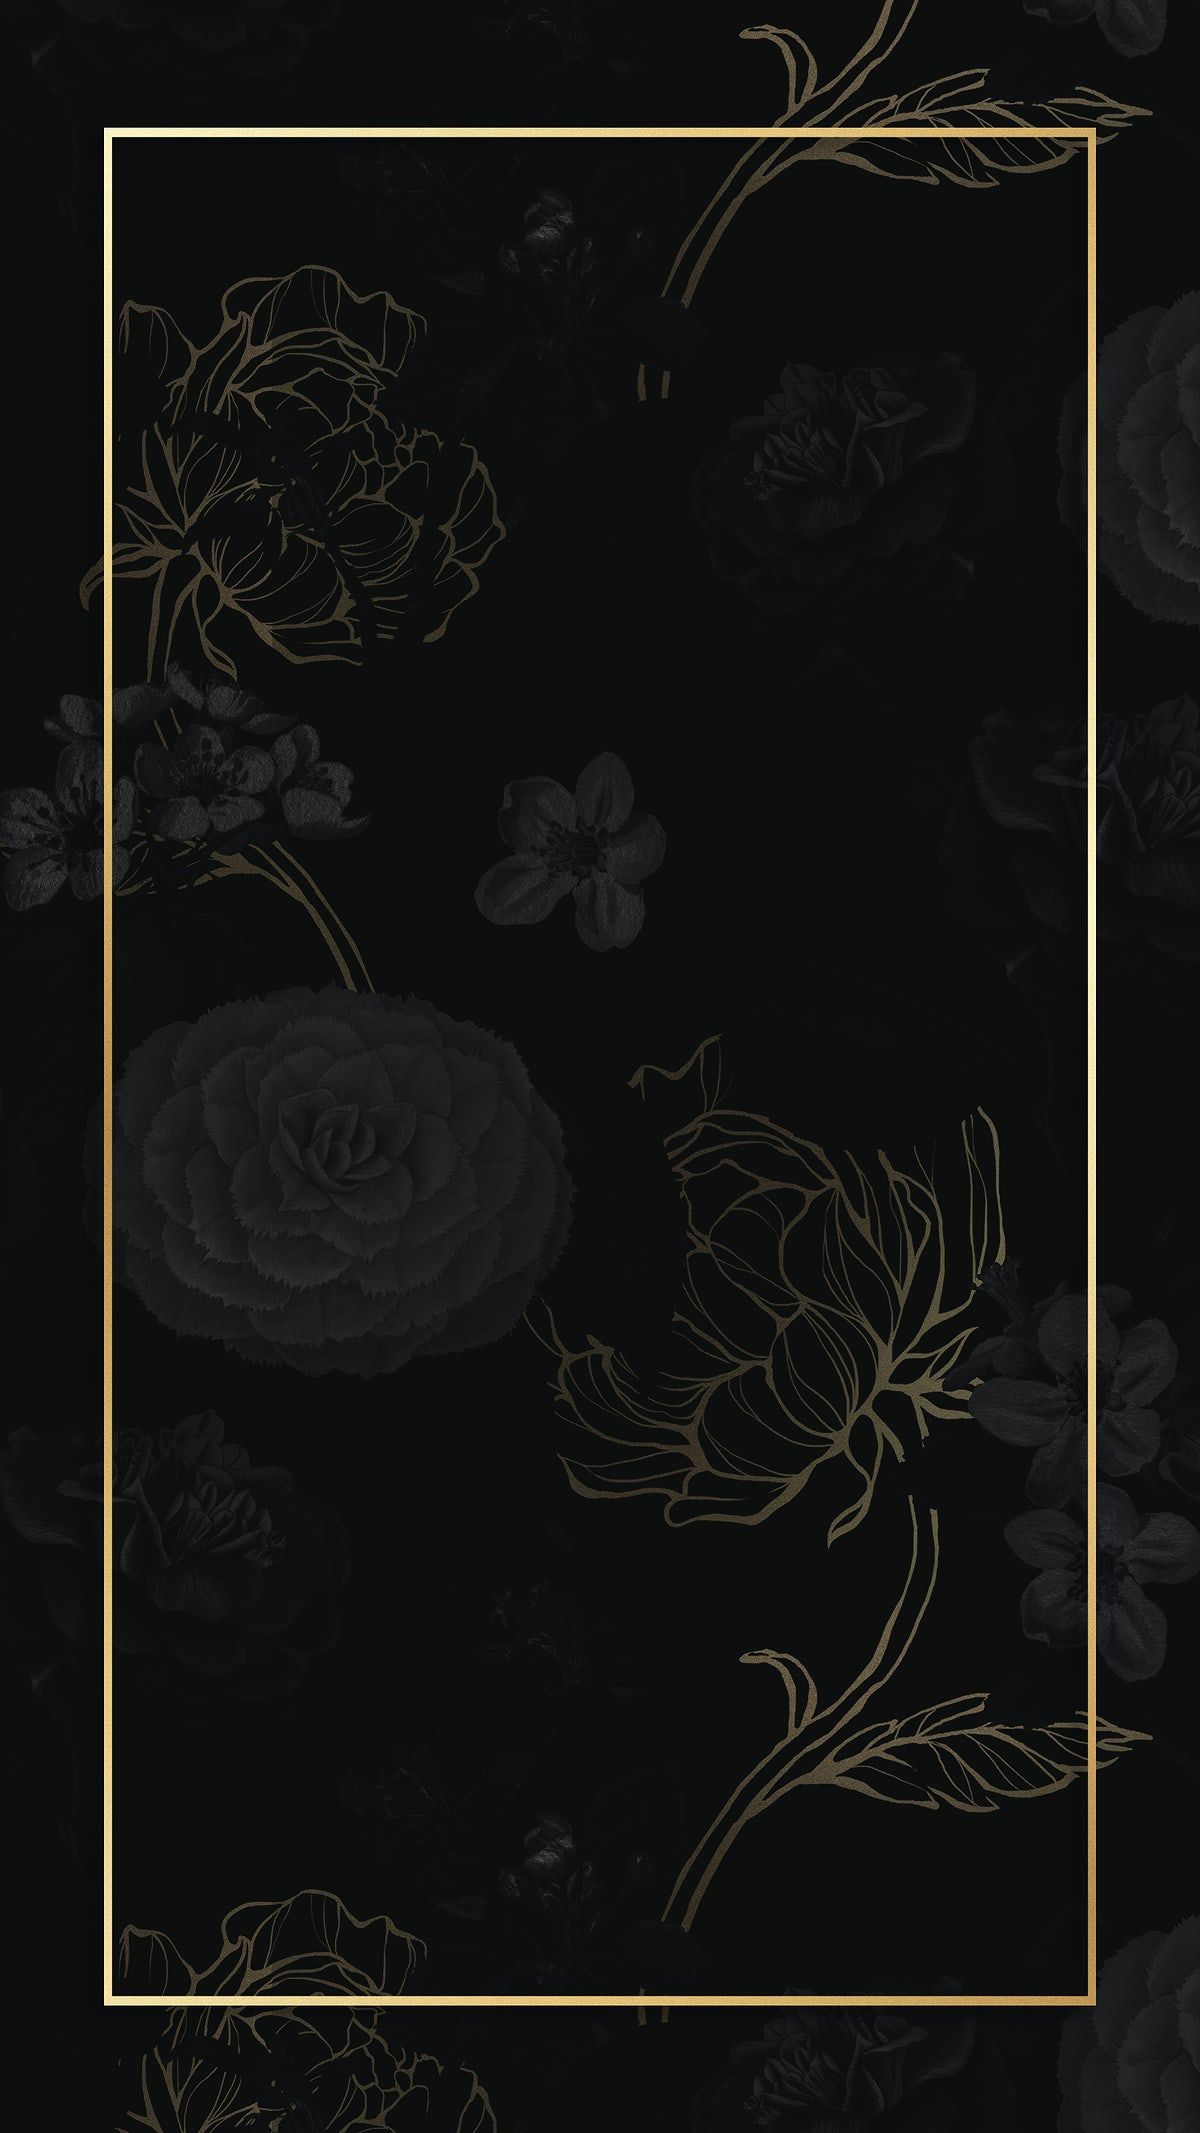 Premium Psd Image Of Gold Frame On A Dark Floral